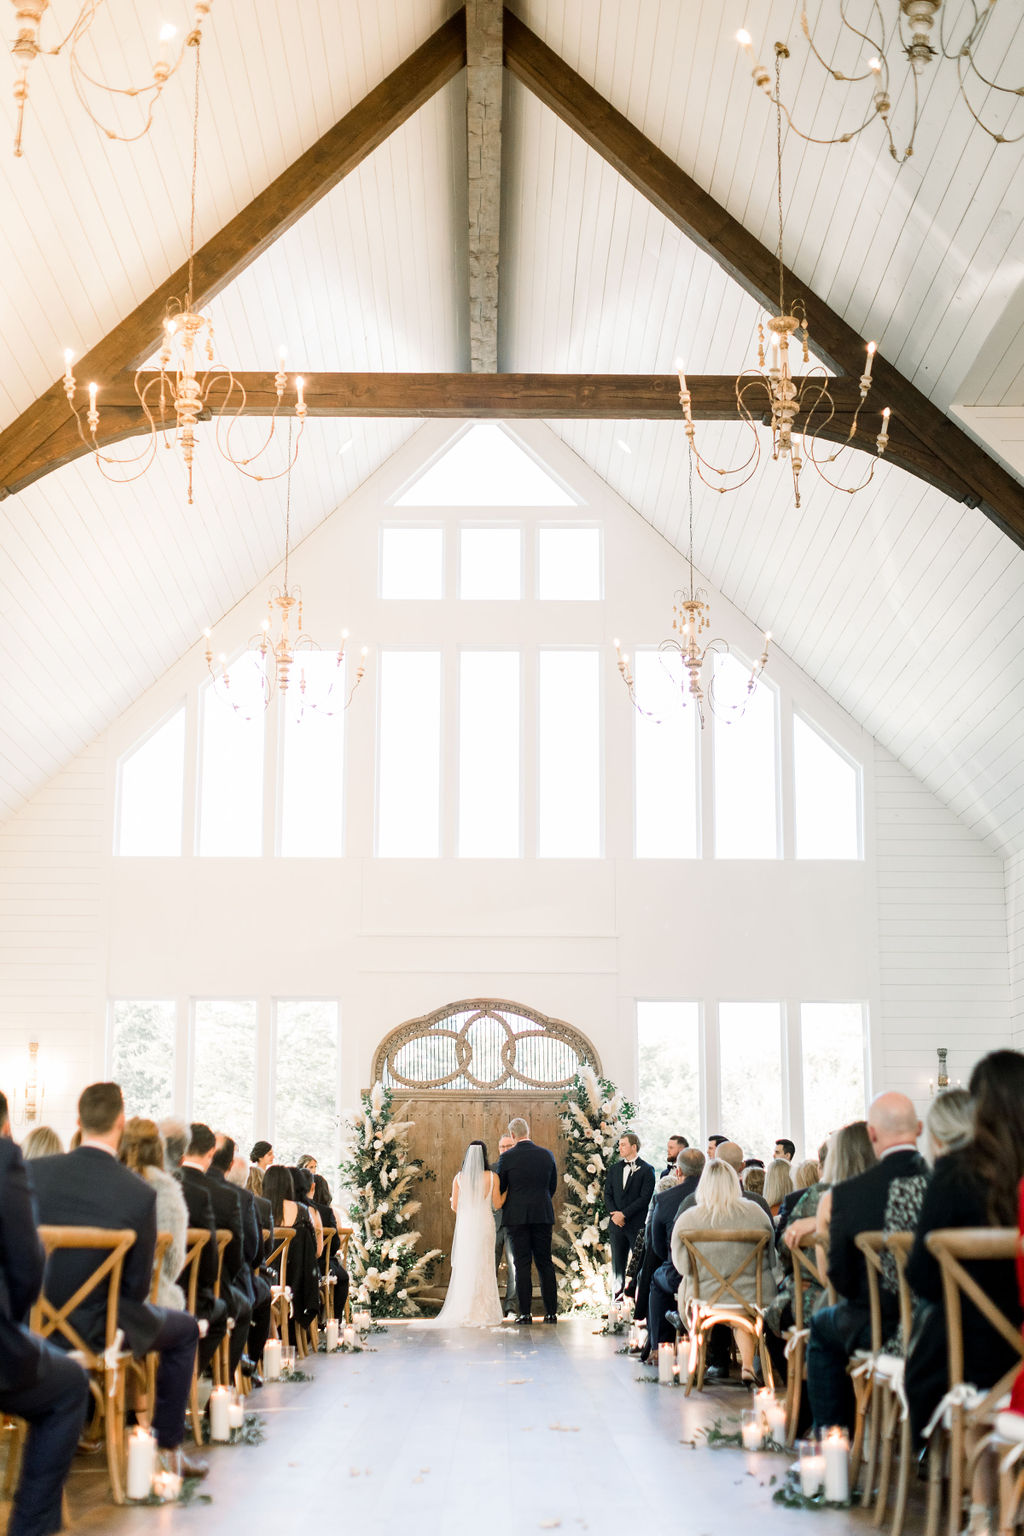 A Stunning Wedding with a Flip | Linda and Luken - Farmhouse